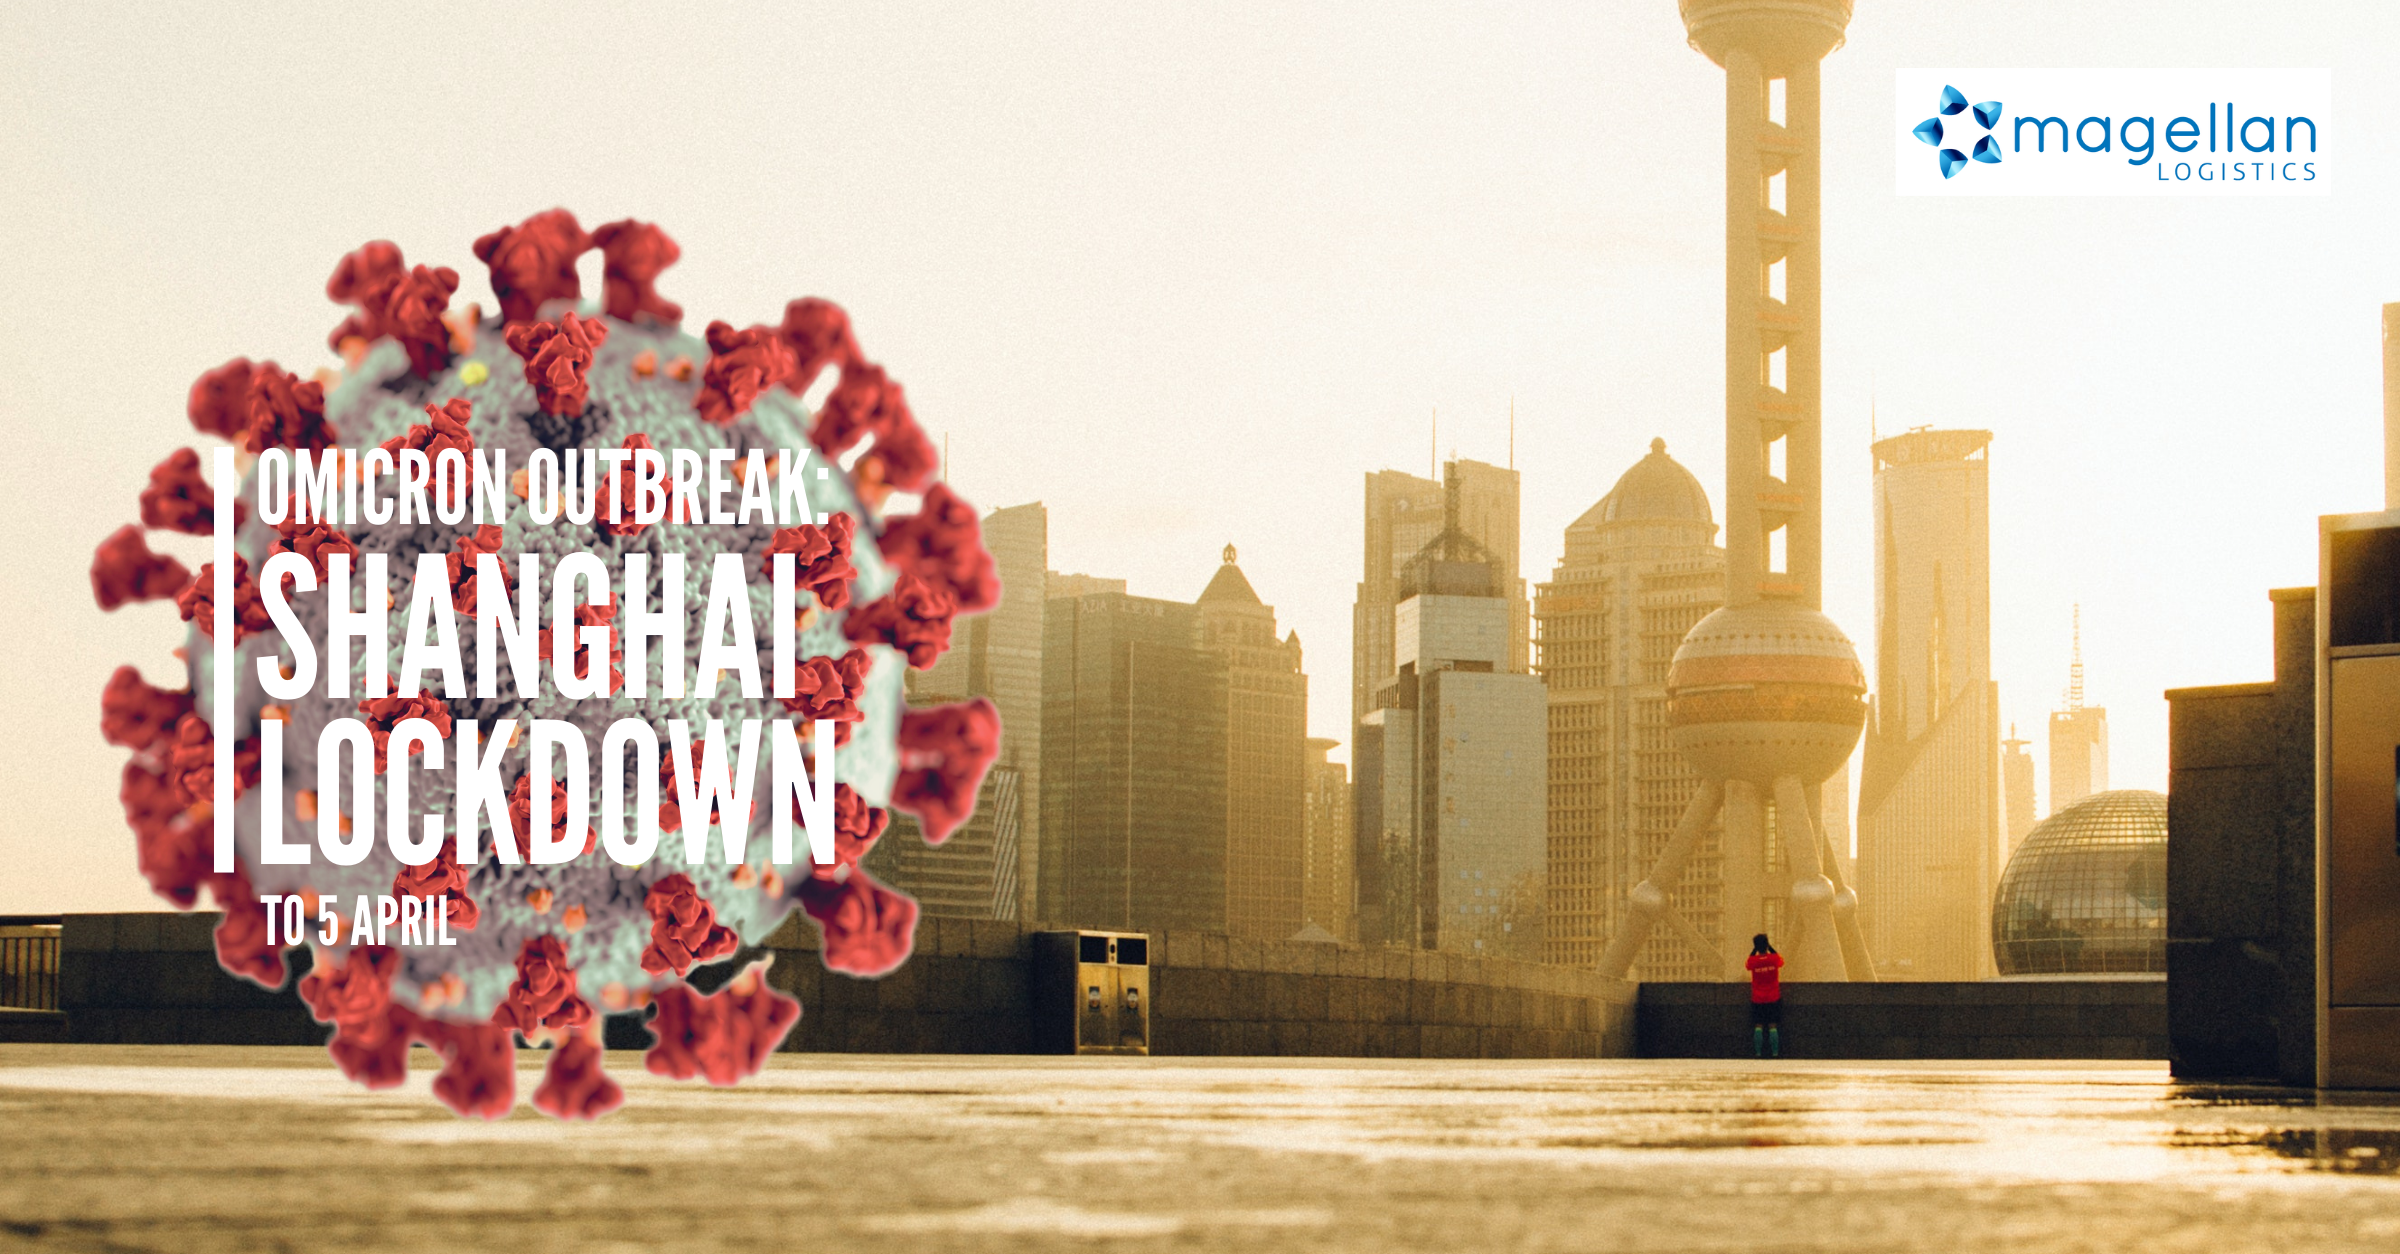 Shanghai lockdown (1200 × 627 px) x2